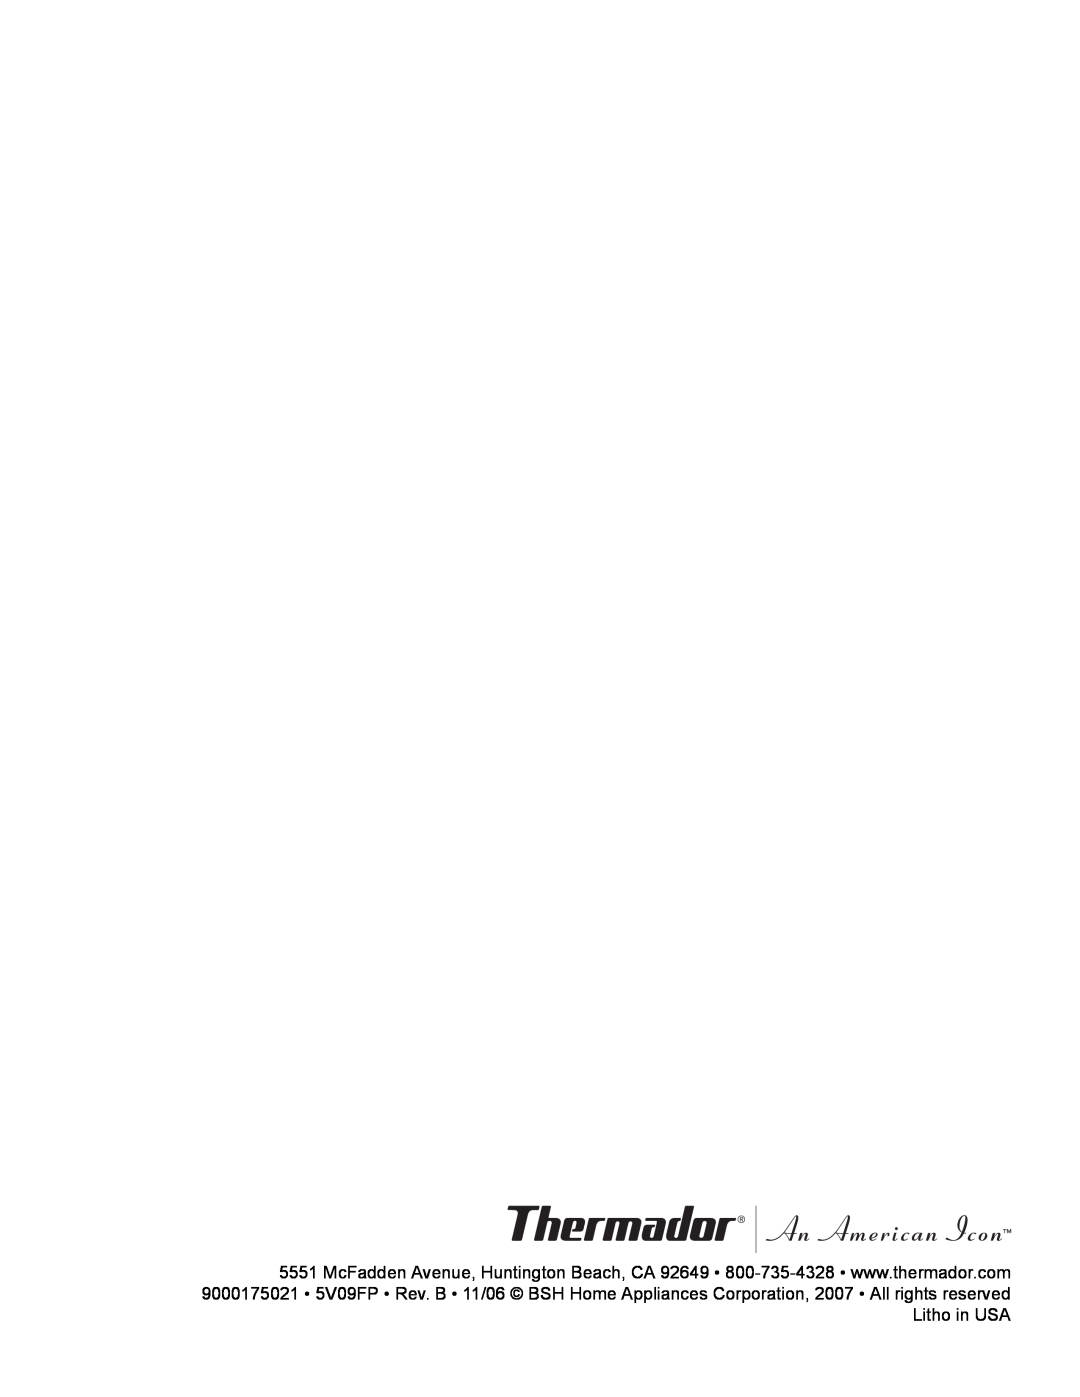 Thermador POD 302 manual 